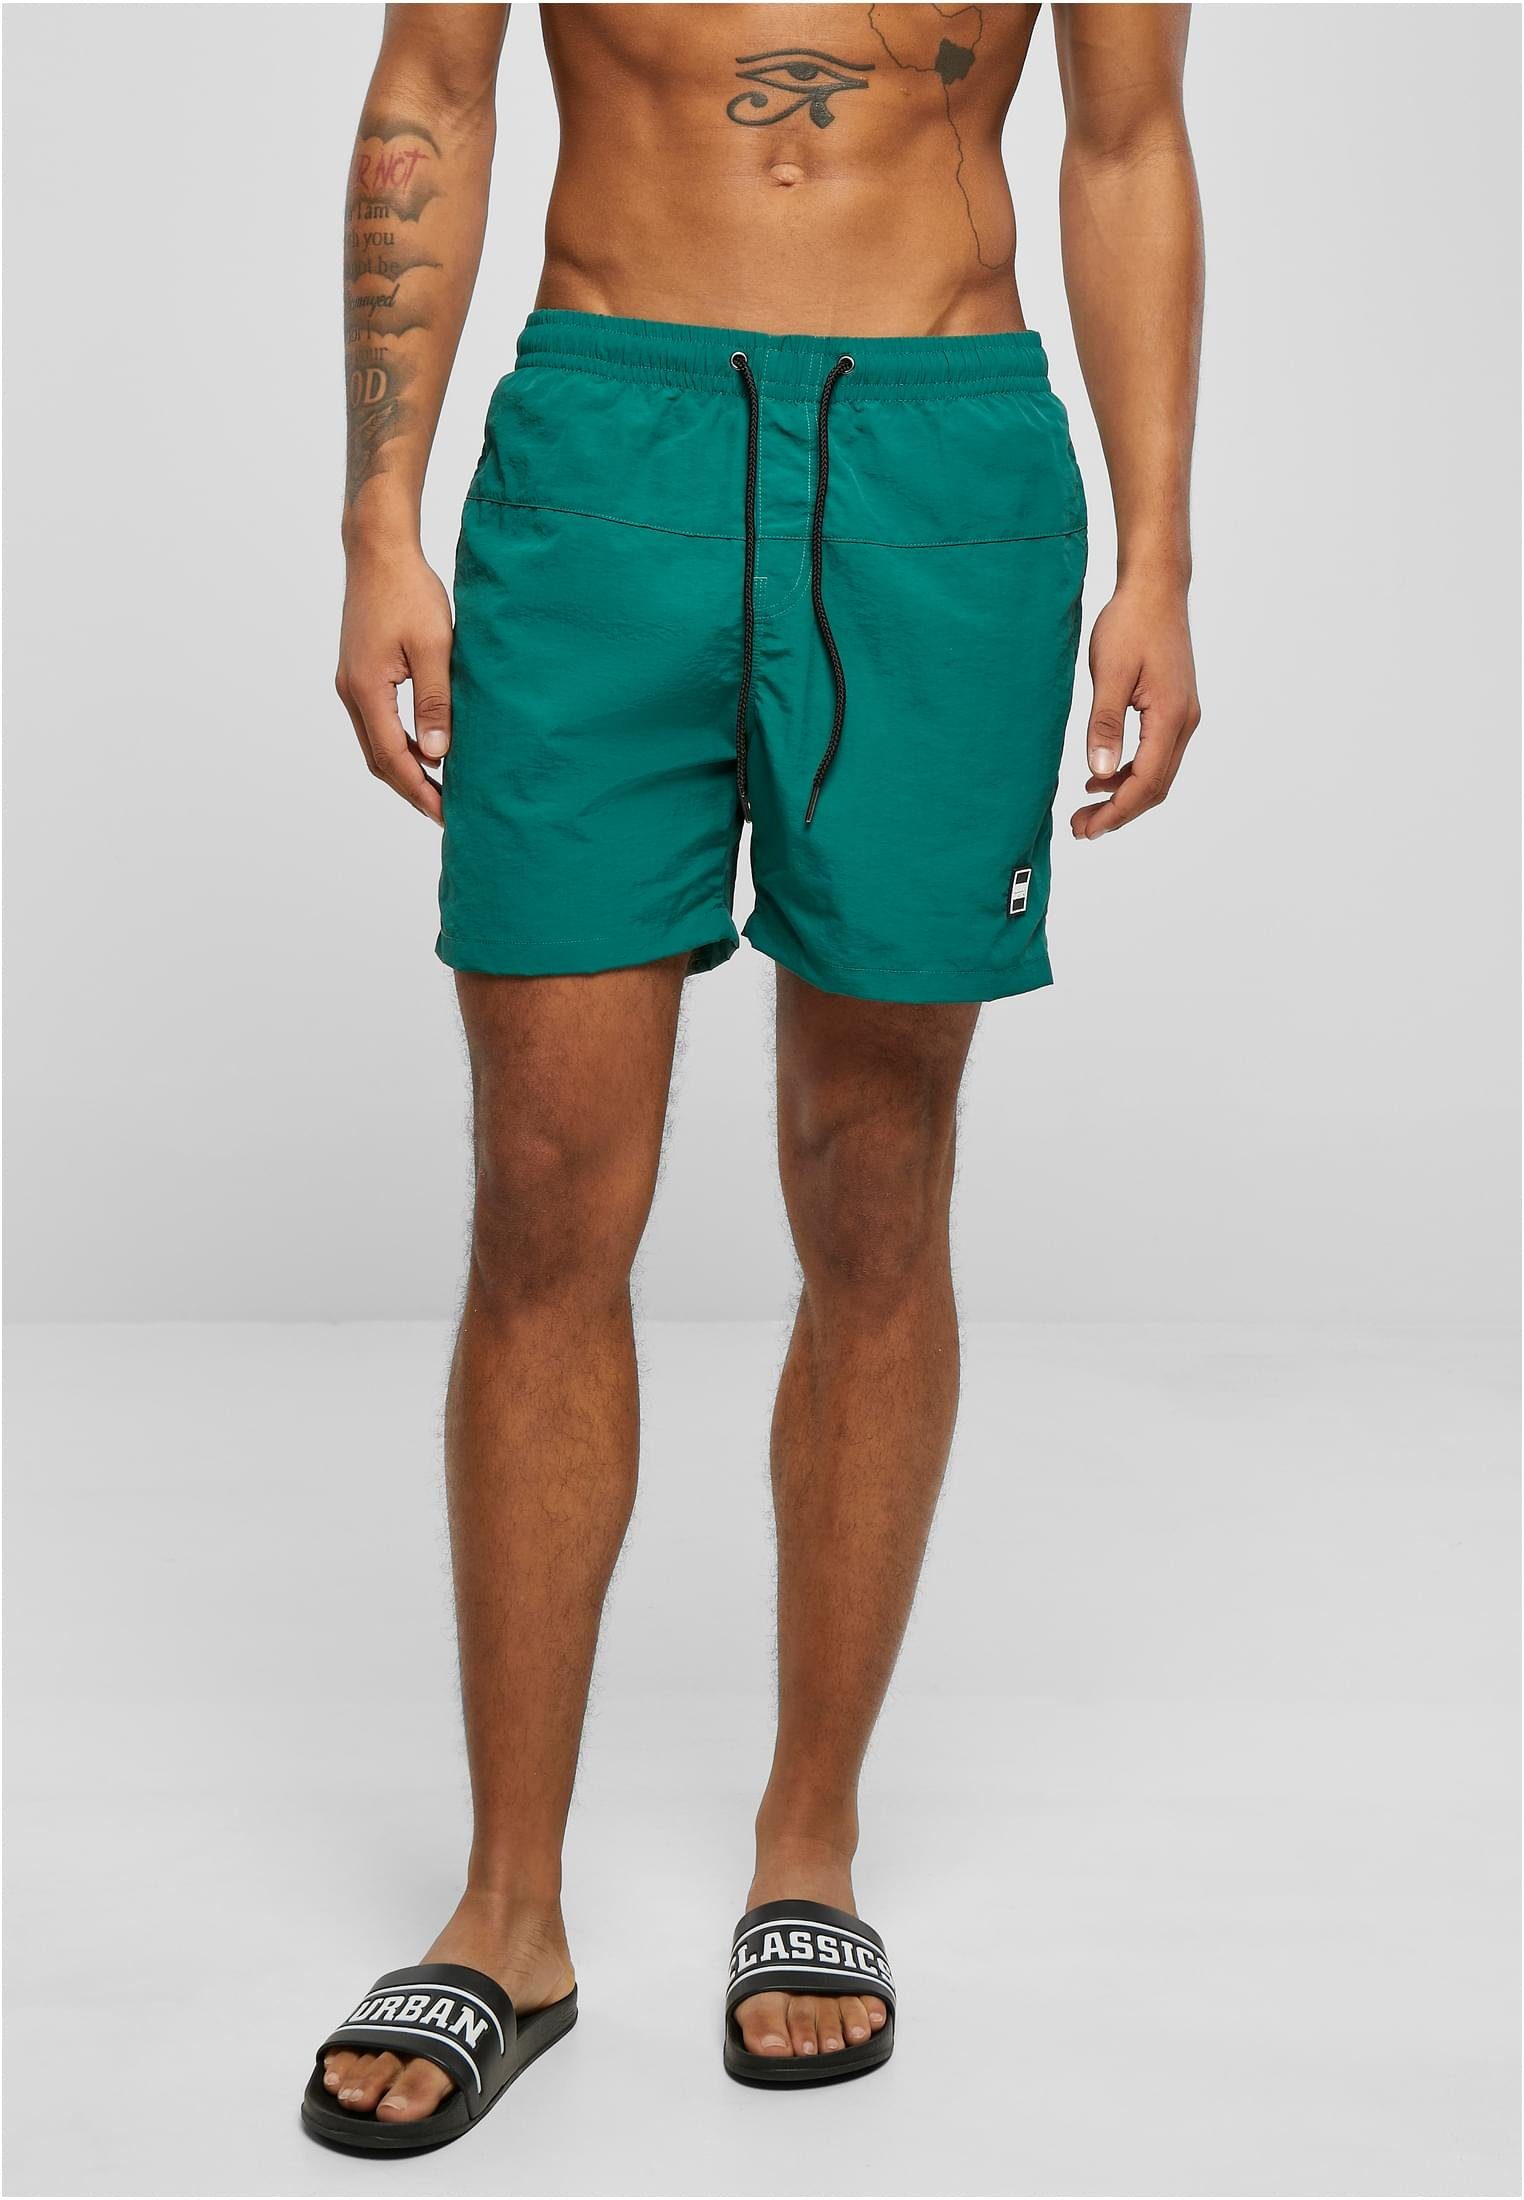 URBAN CLASSICS Badeshorts Herren Swim green Shorts